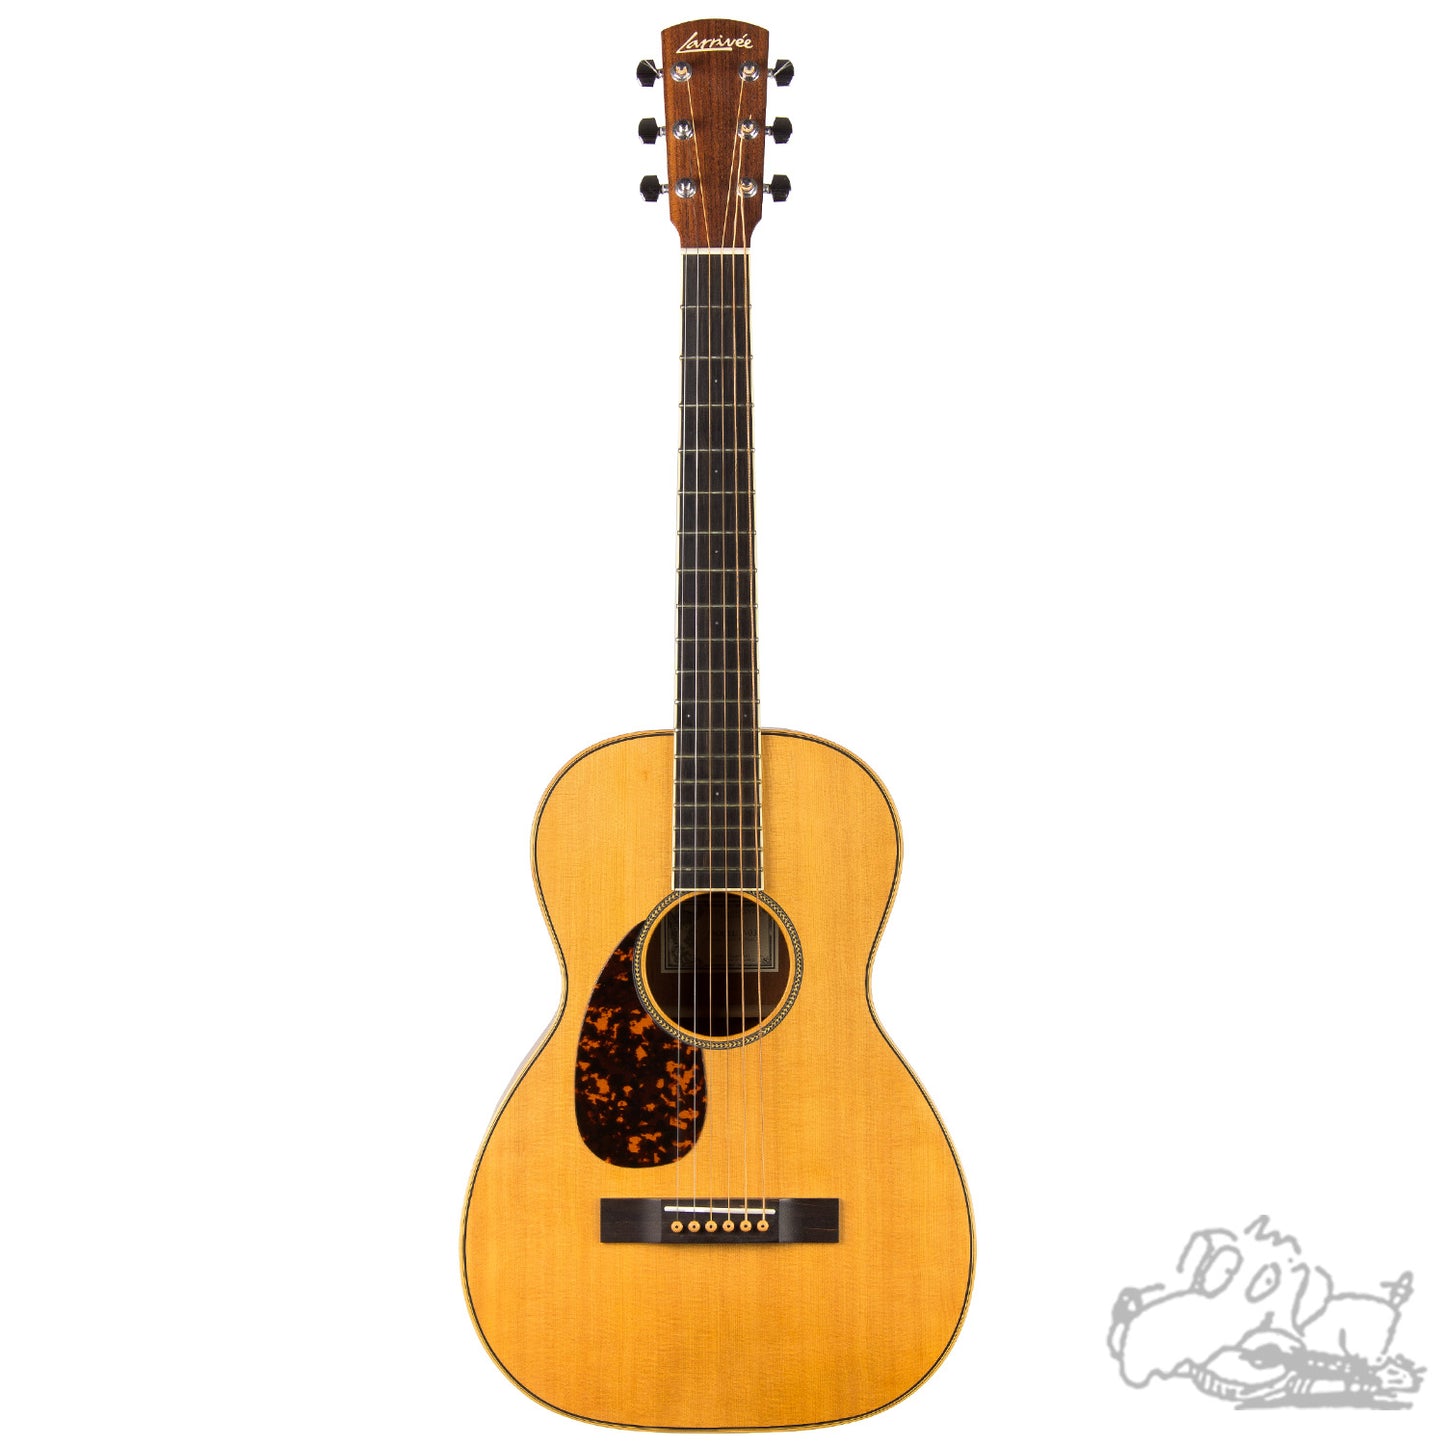 2010 Larrivée- P-03 Parlor Model Acoustic Guitar - Left-Handed - with Italian Spruce